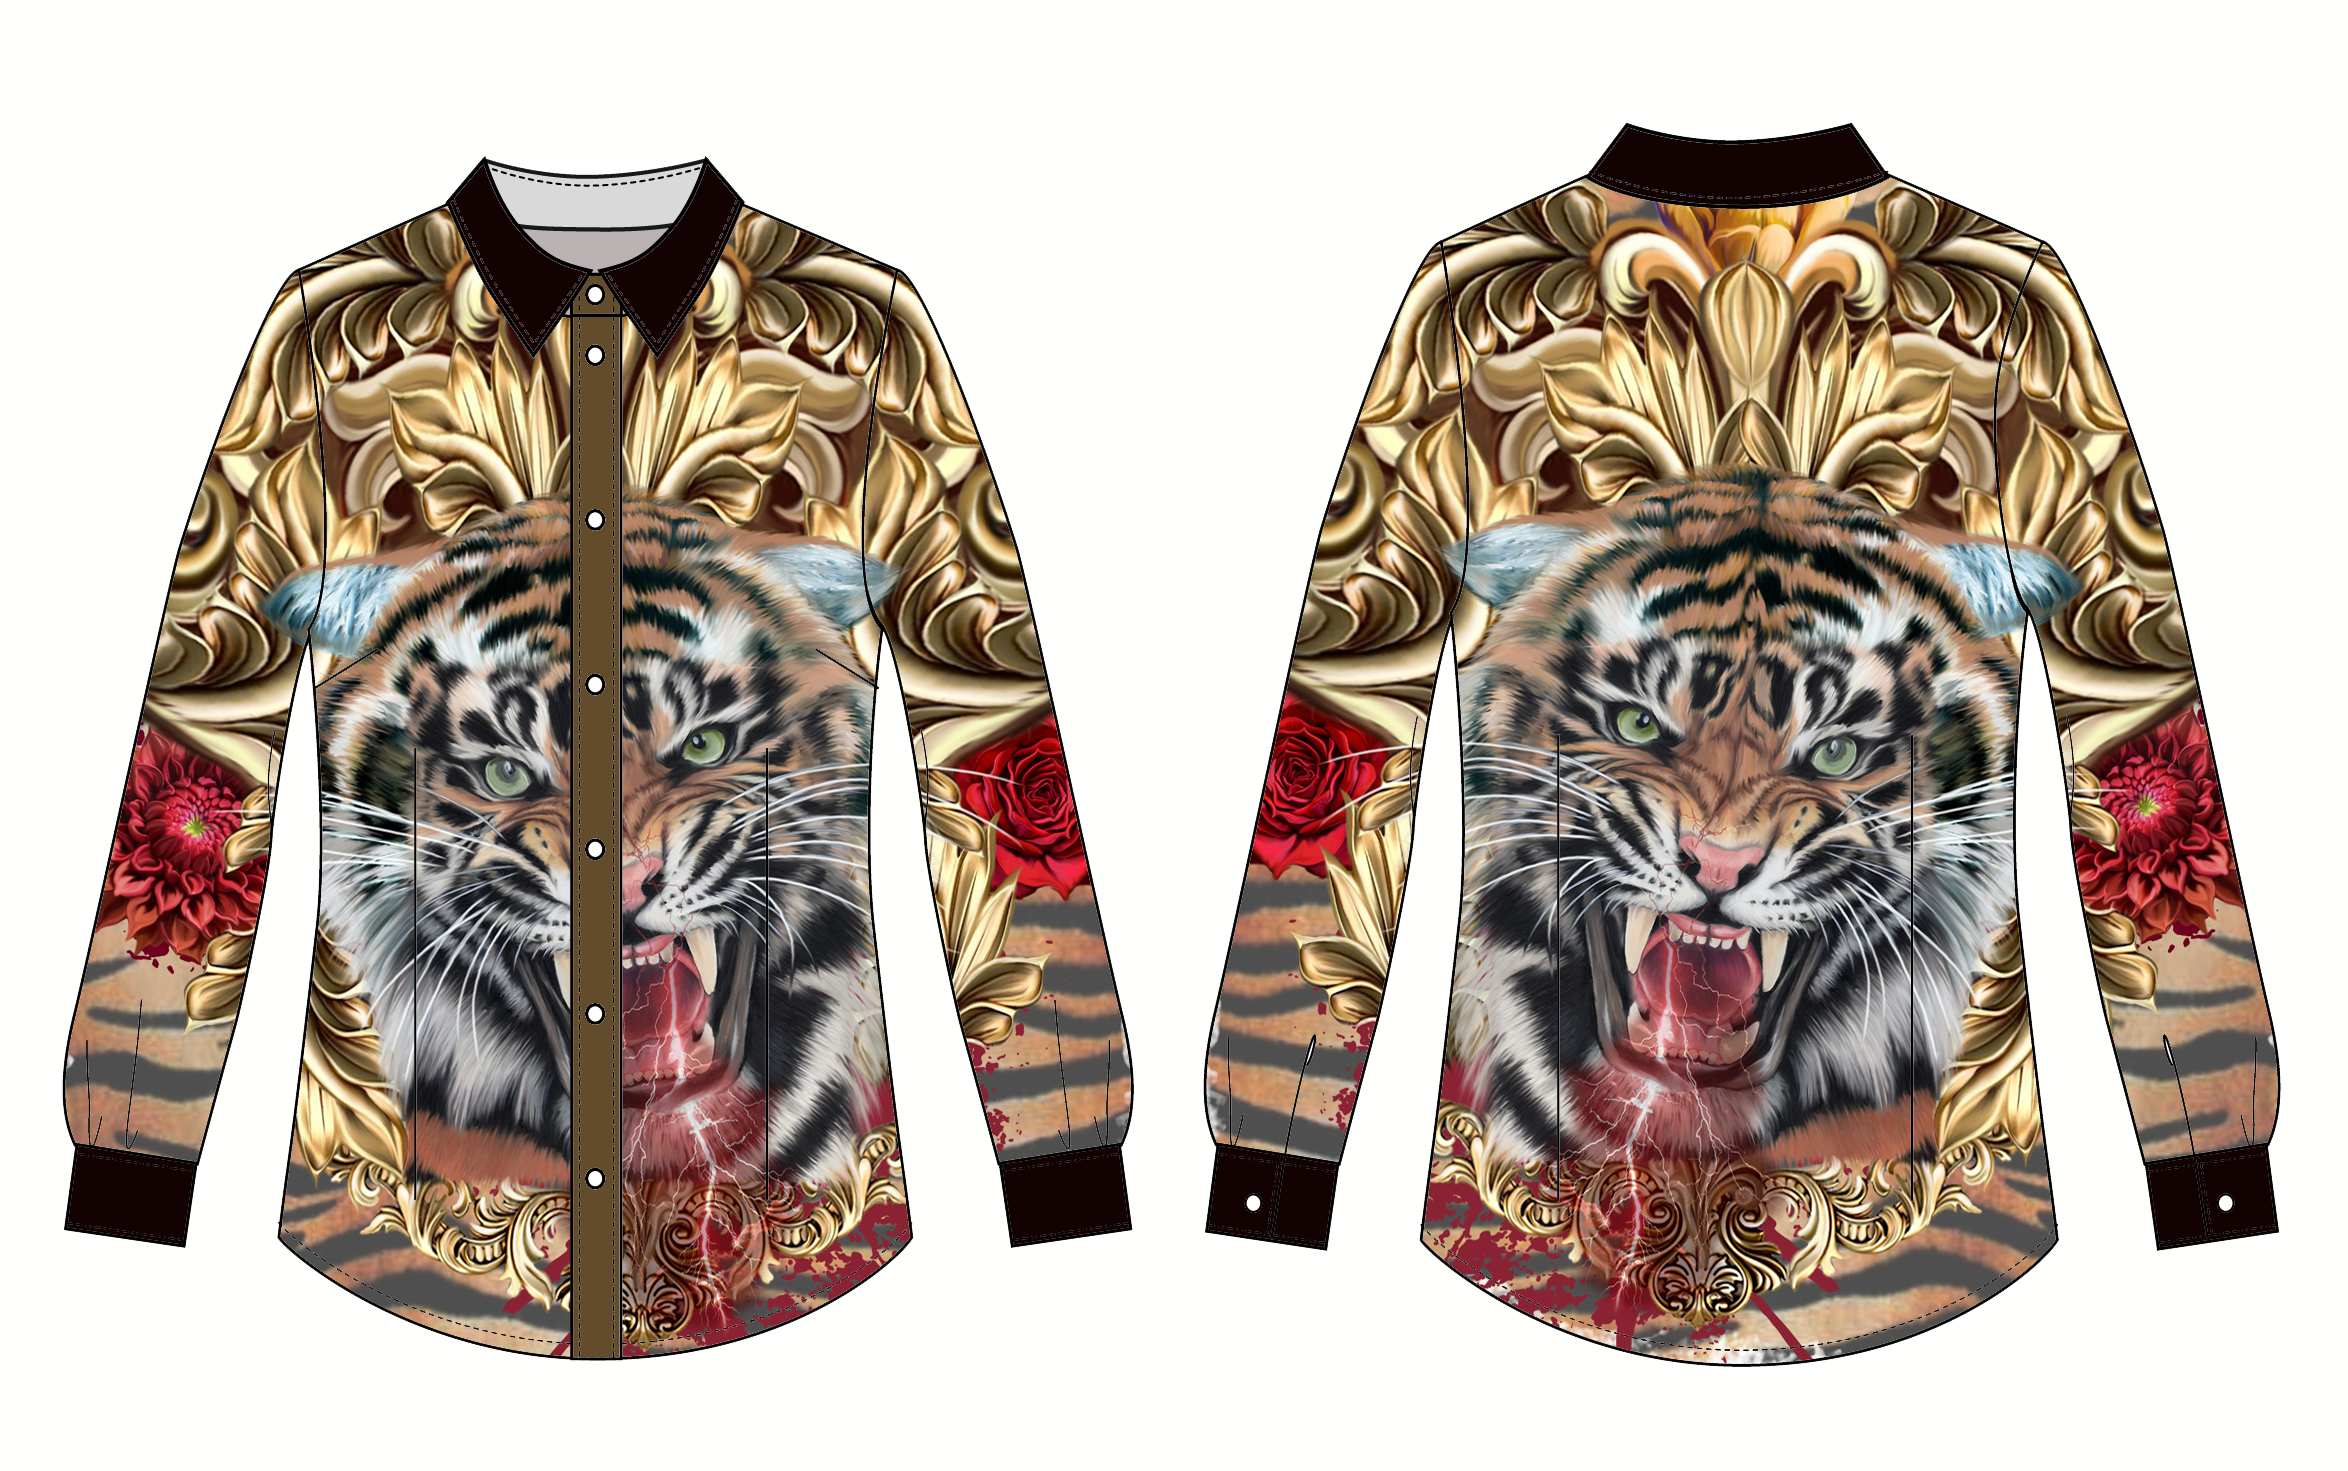 Tiger shirt design